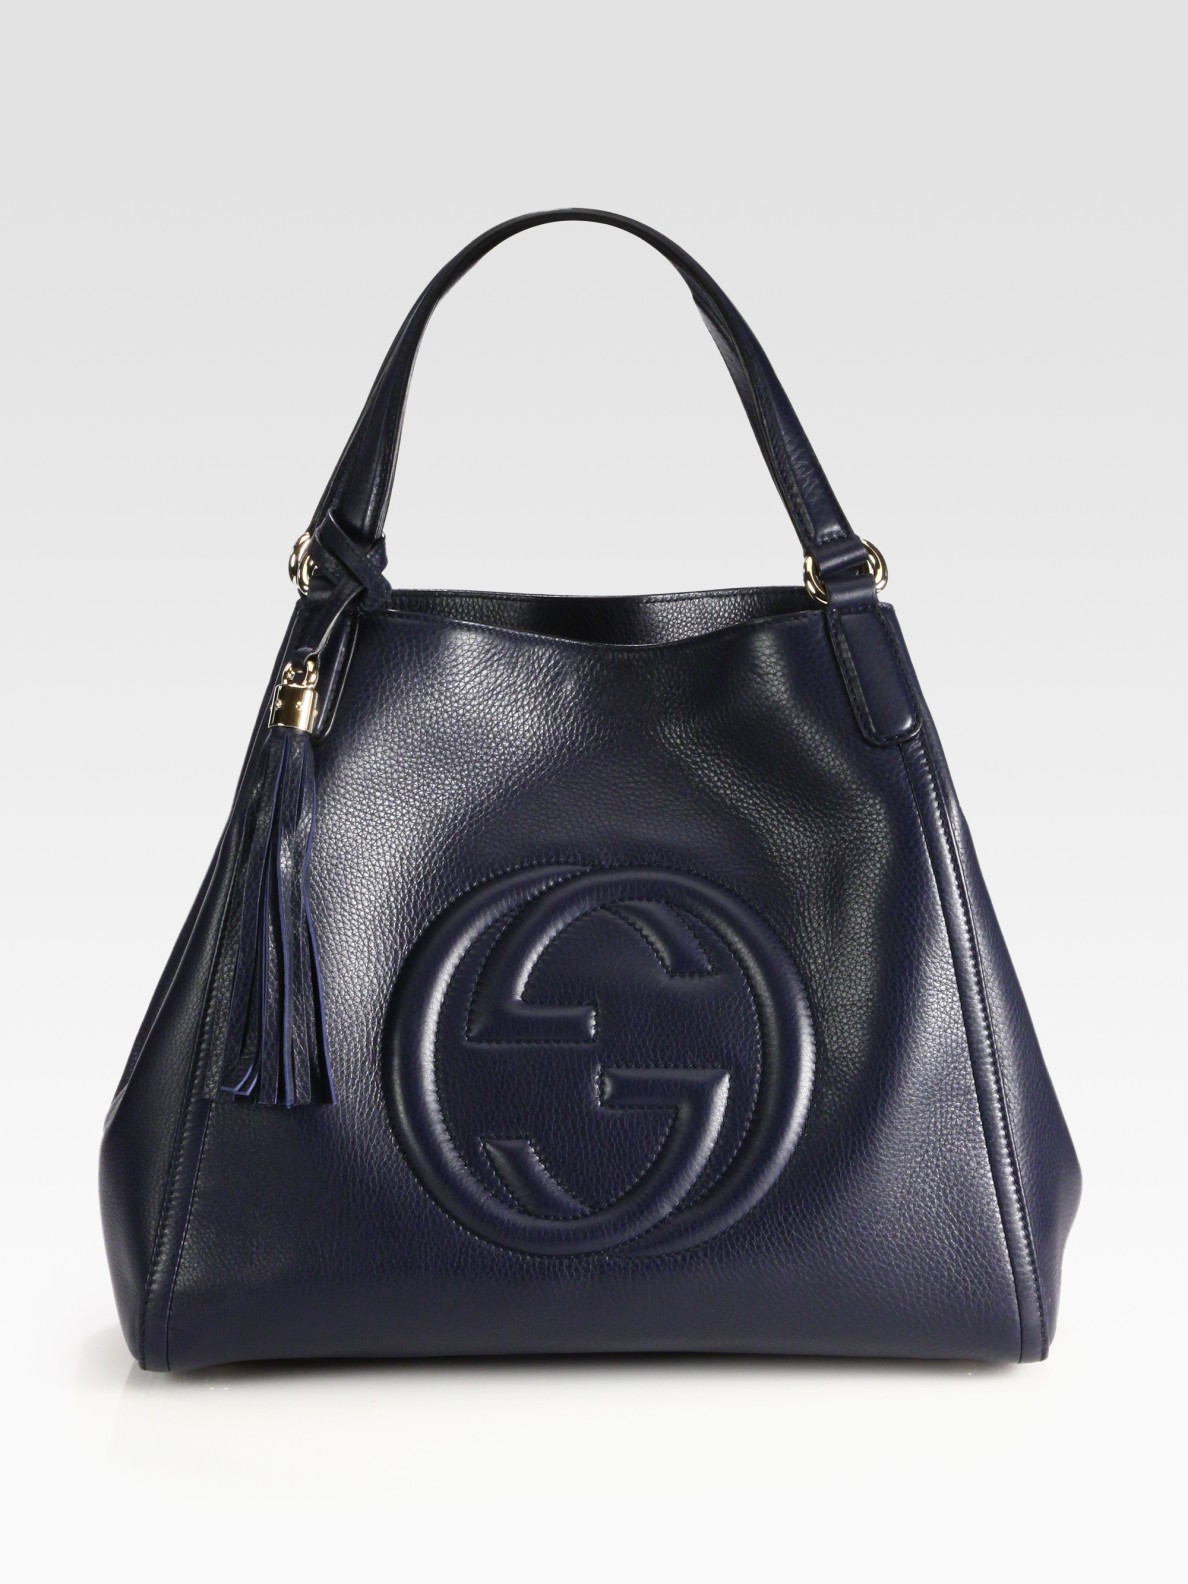 Lyst - Gucci Soho Leather Shoulder Bag in Blue